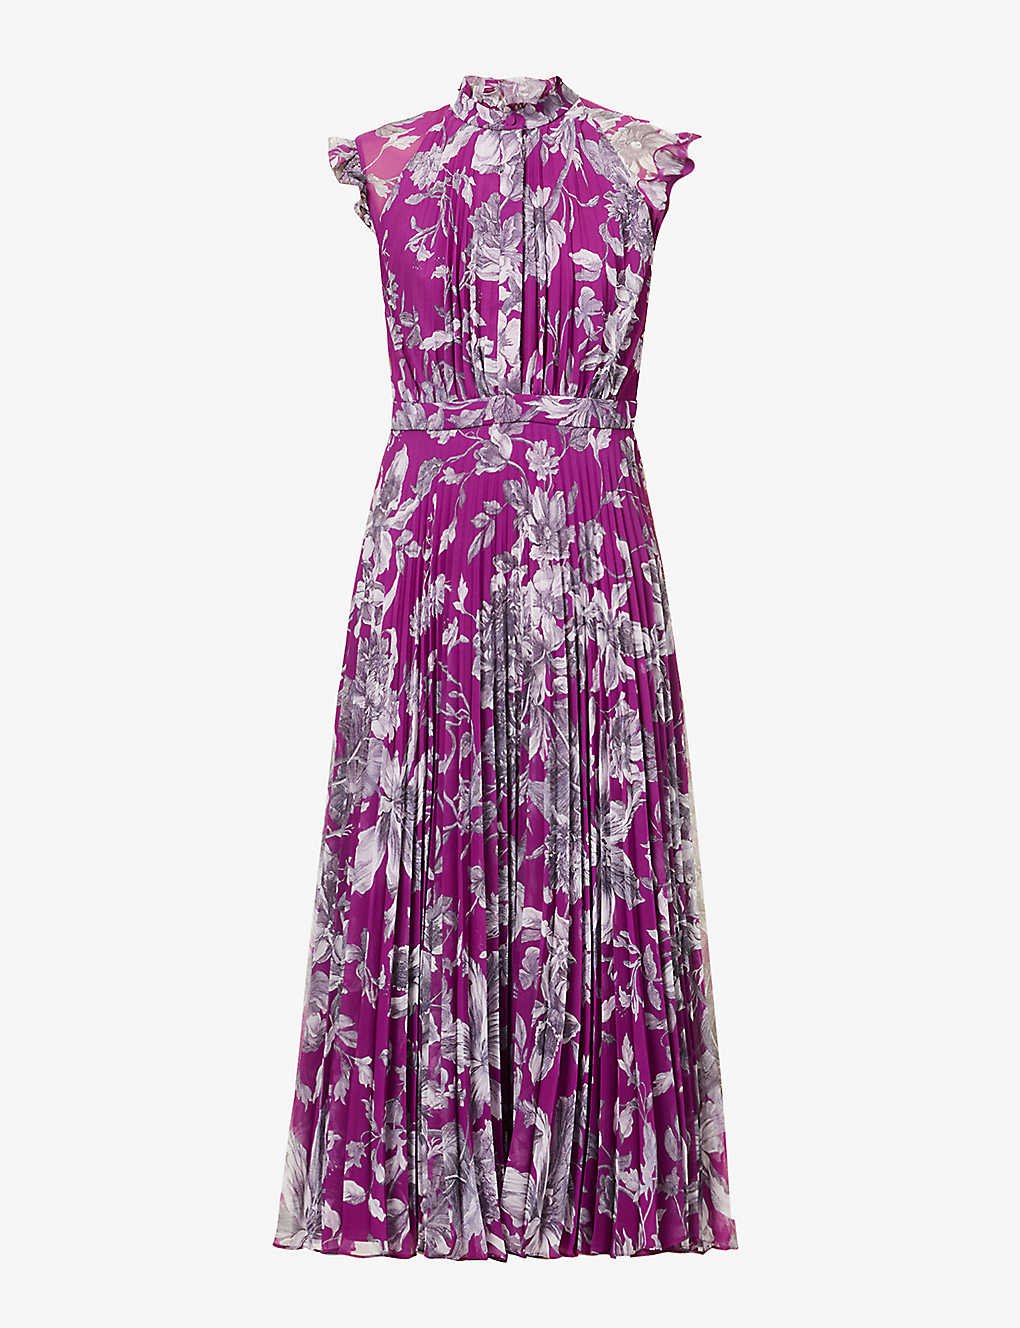 Erdem Roisin Floral-Print Dress in Purple — UFO No More